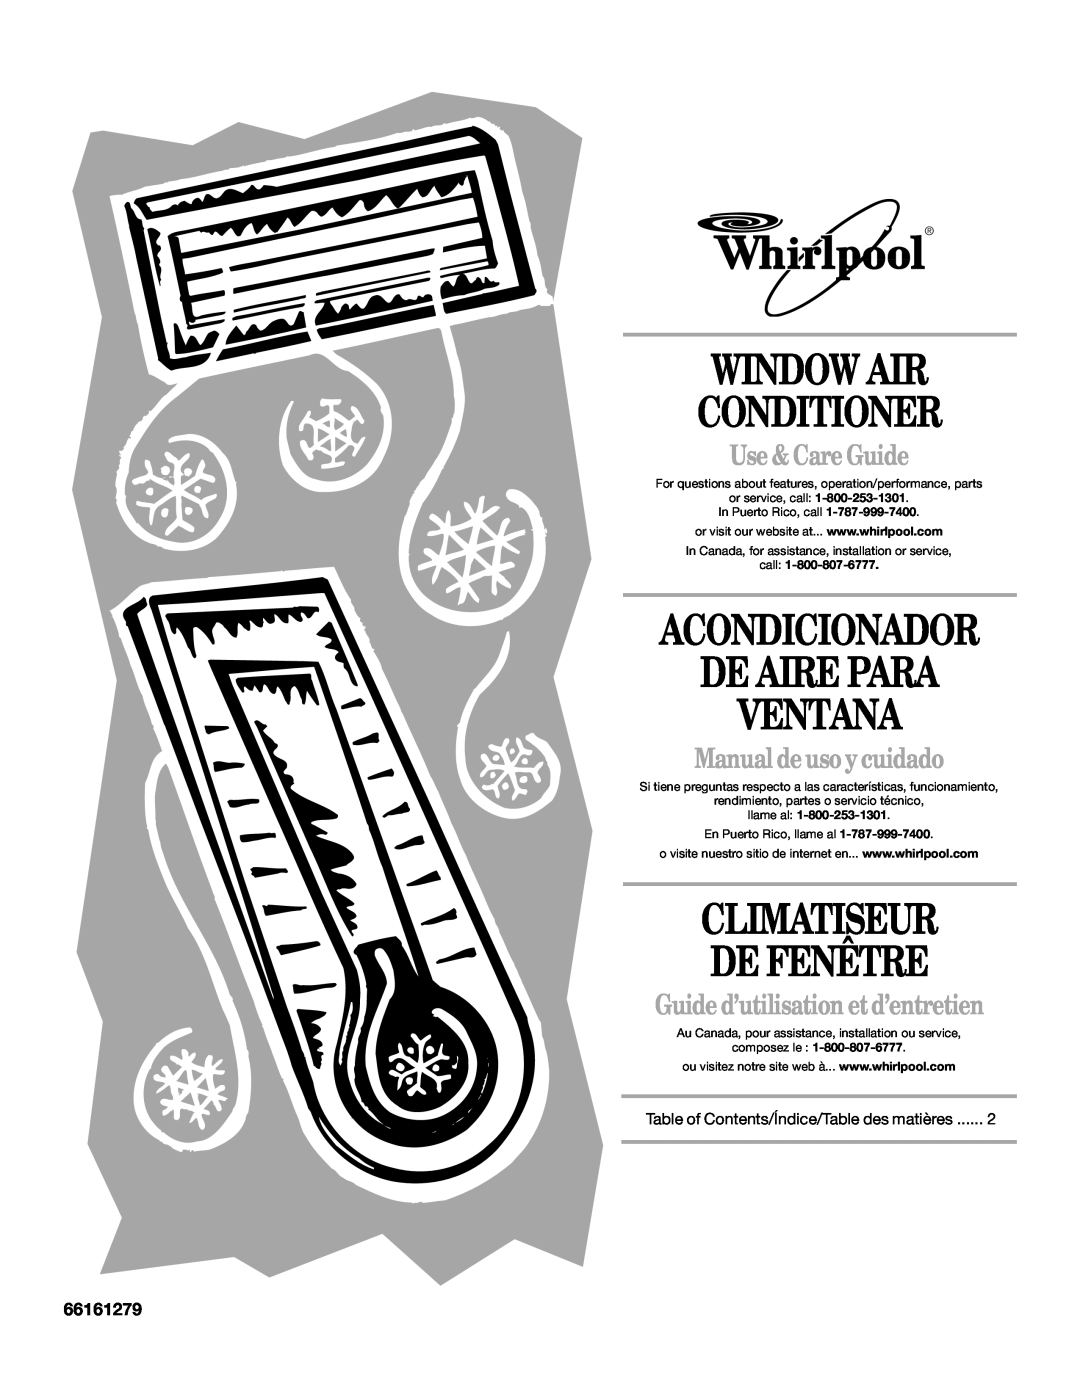 Whirlpool 66161279 manual Window Air Conditioner, Acondicionador De Aire Para Ventana, Climatiseur De Fenêtre, call 